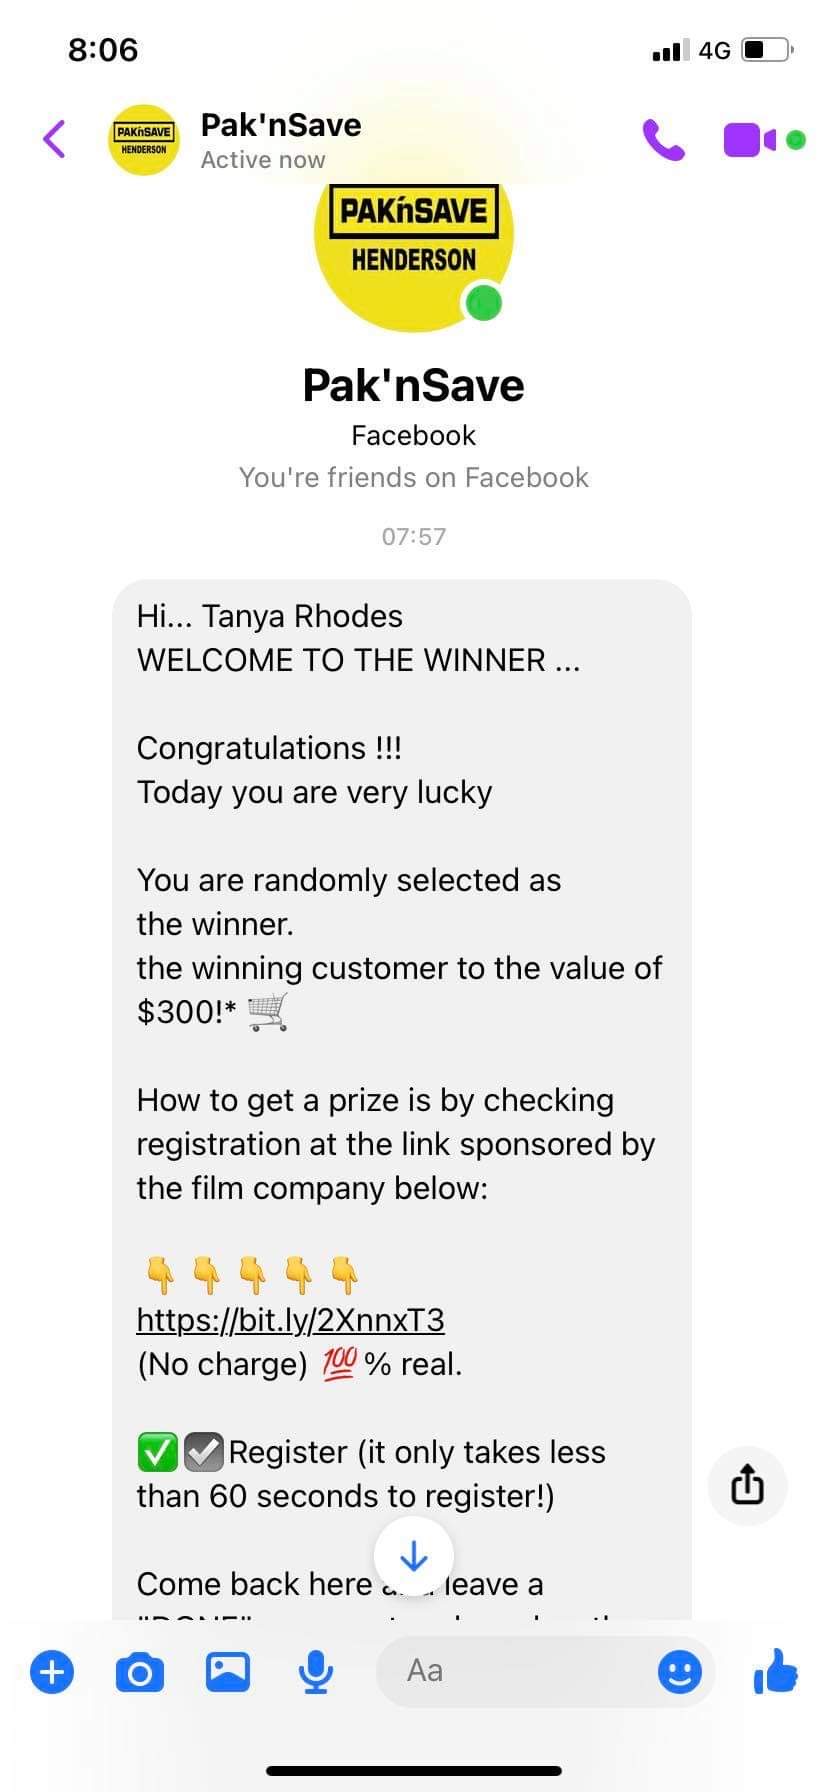 Scam alert - PAK'nSAVE Henderson Facebook competition